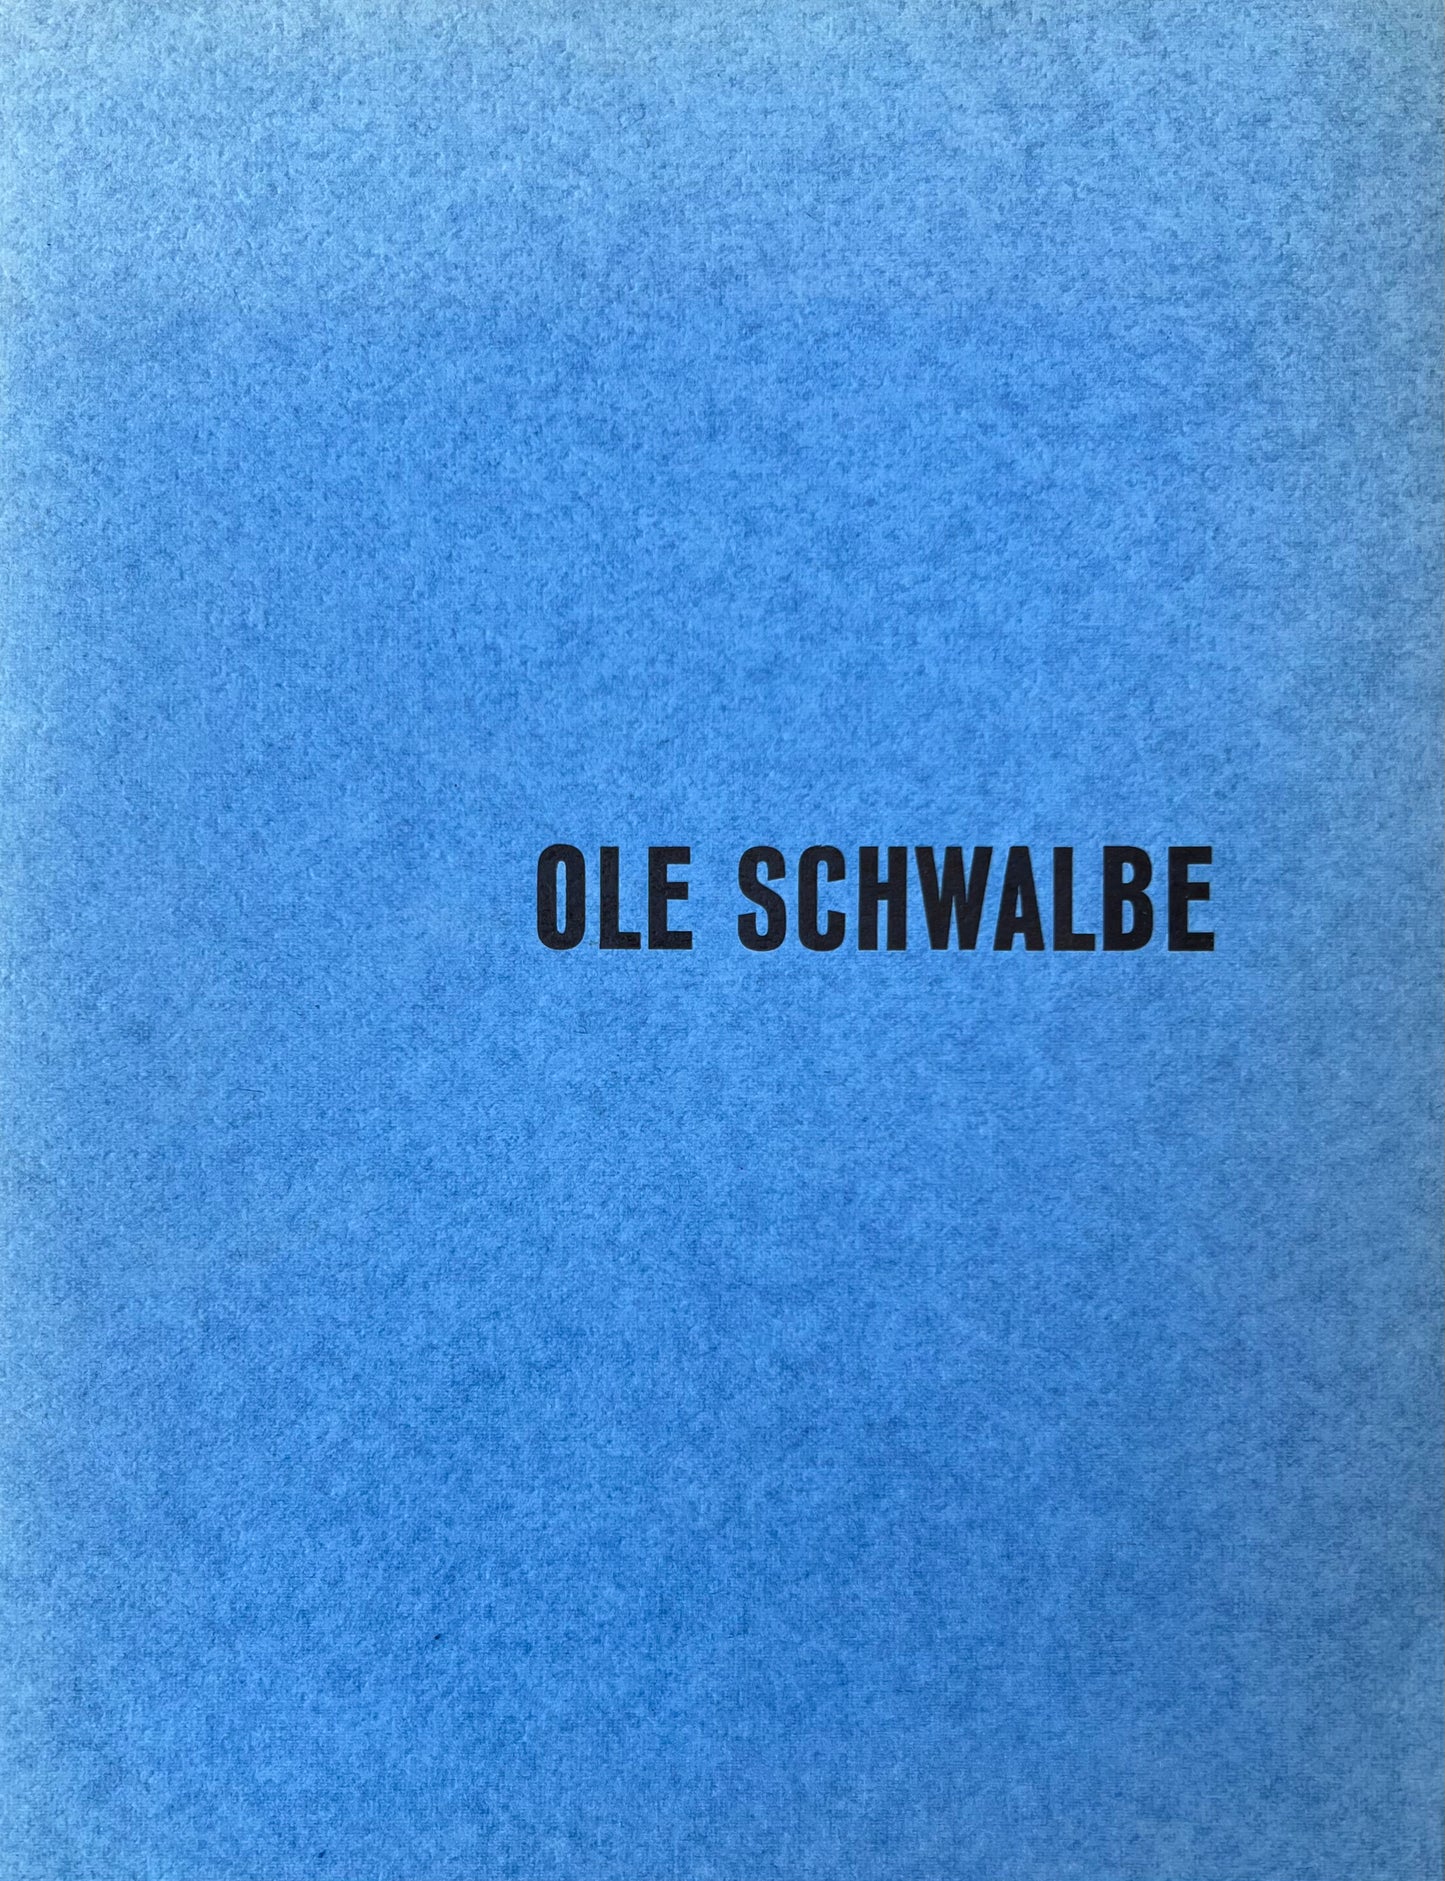 Galerie Børge Birch. “Ole Schwalbe”, 1955-1960